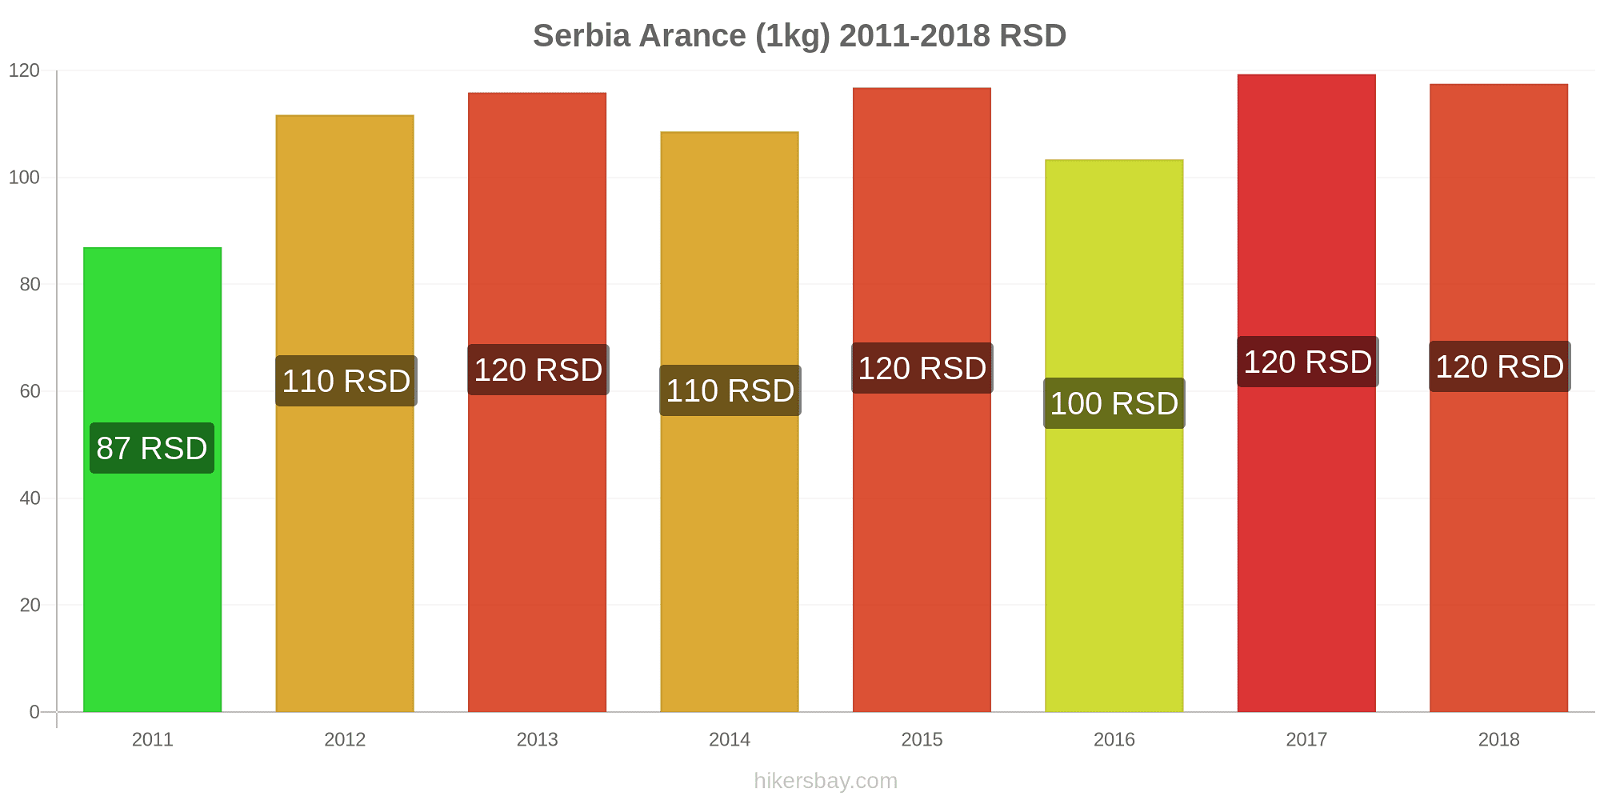 Serbia cambi di prezzo Arance (1kg) hikersbay.com